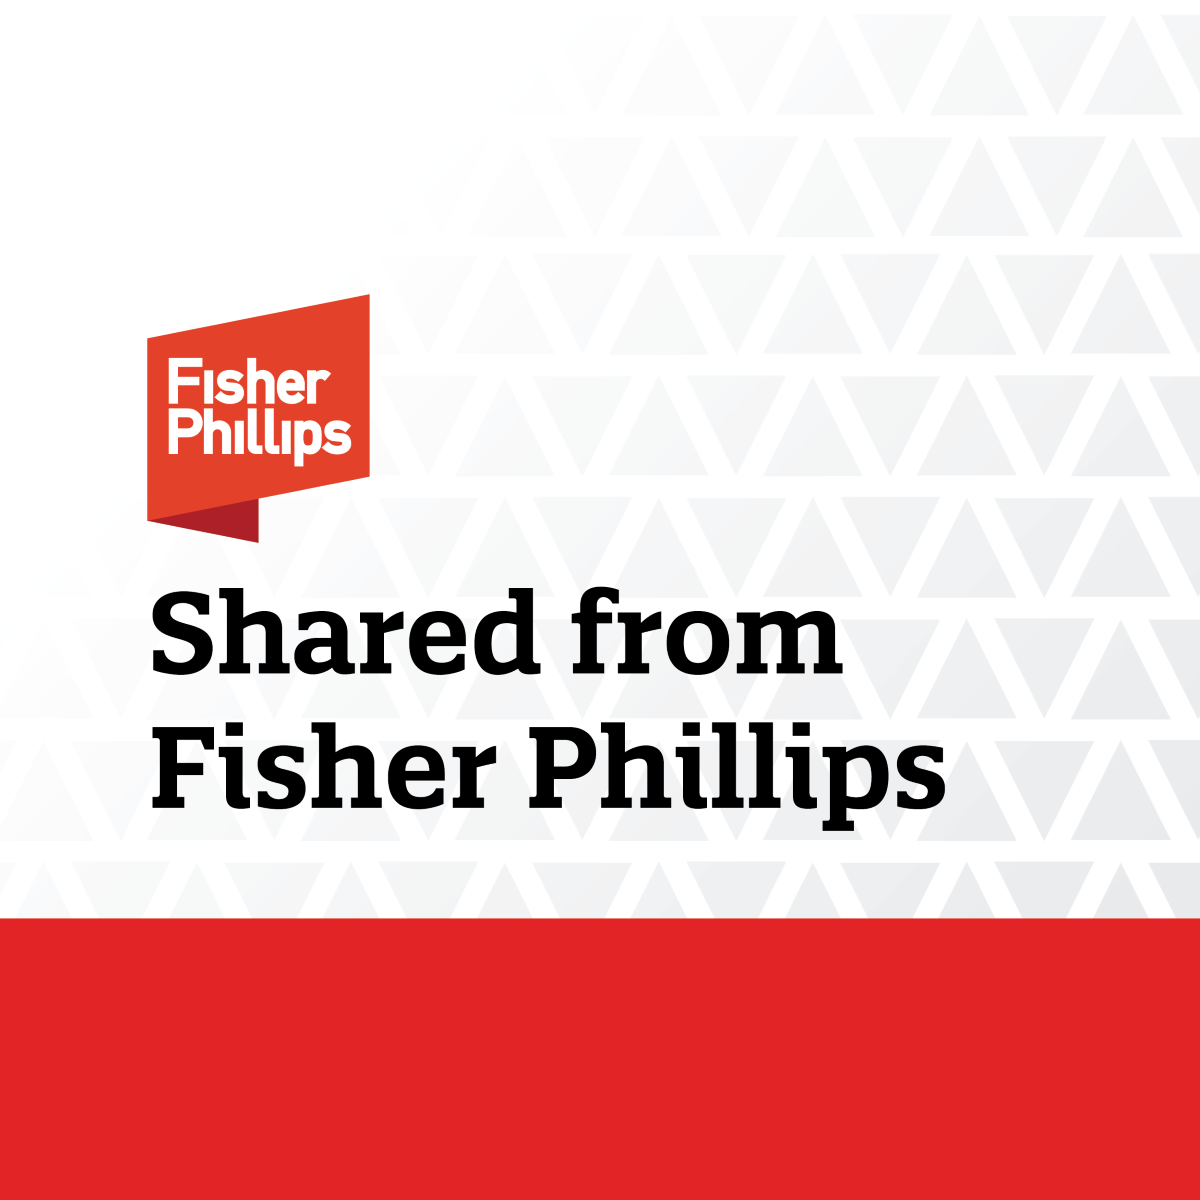 www.fisherphillips.com